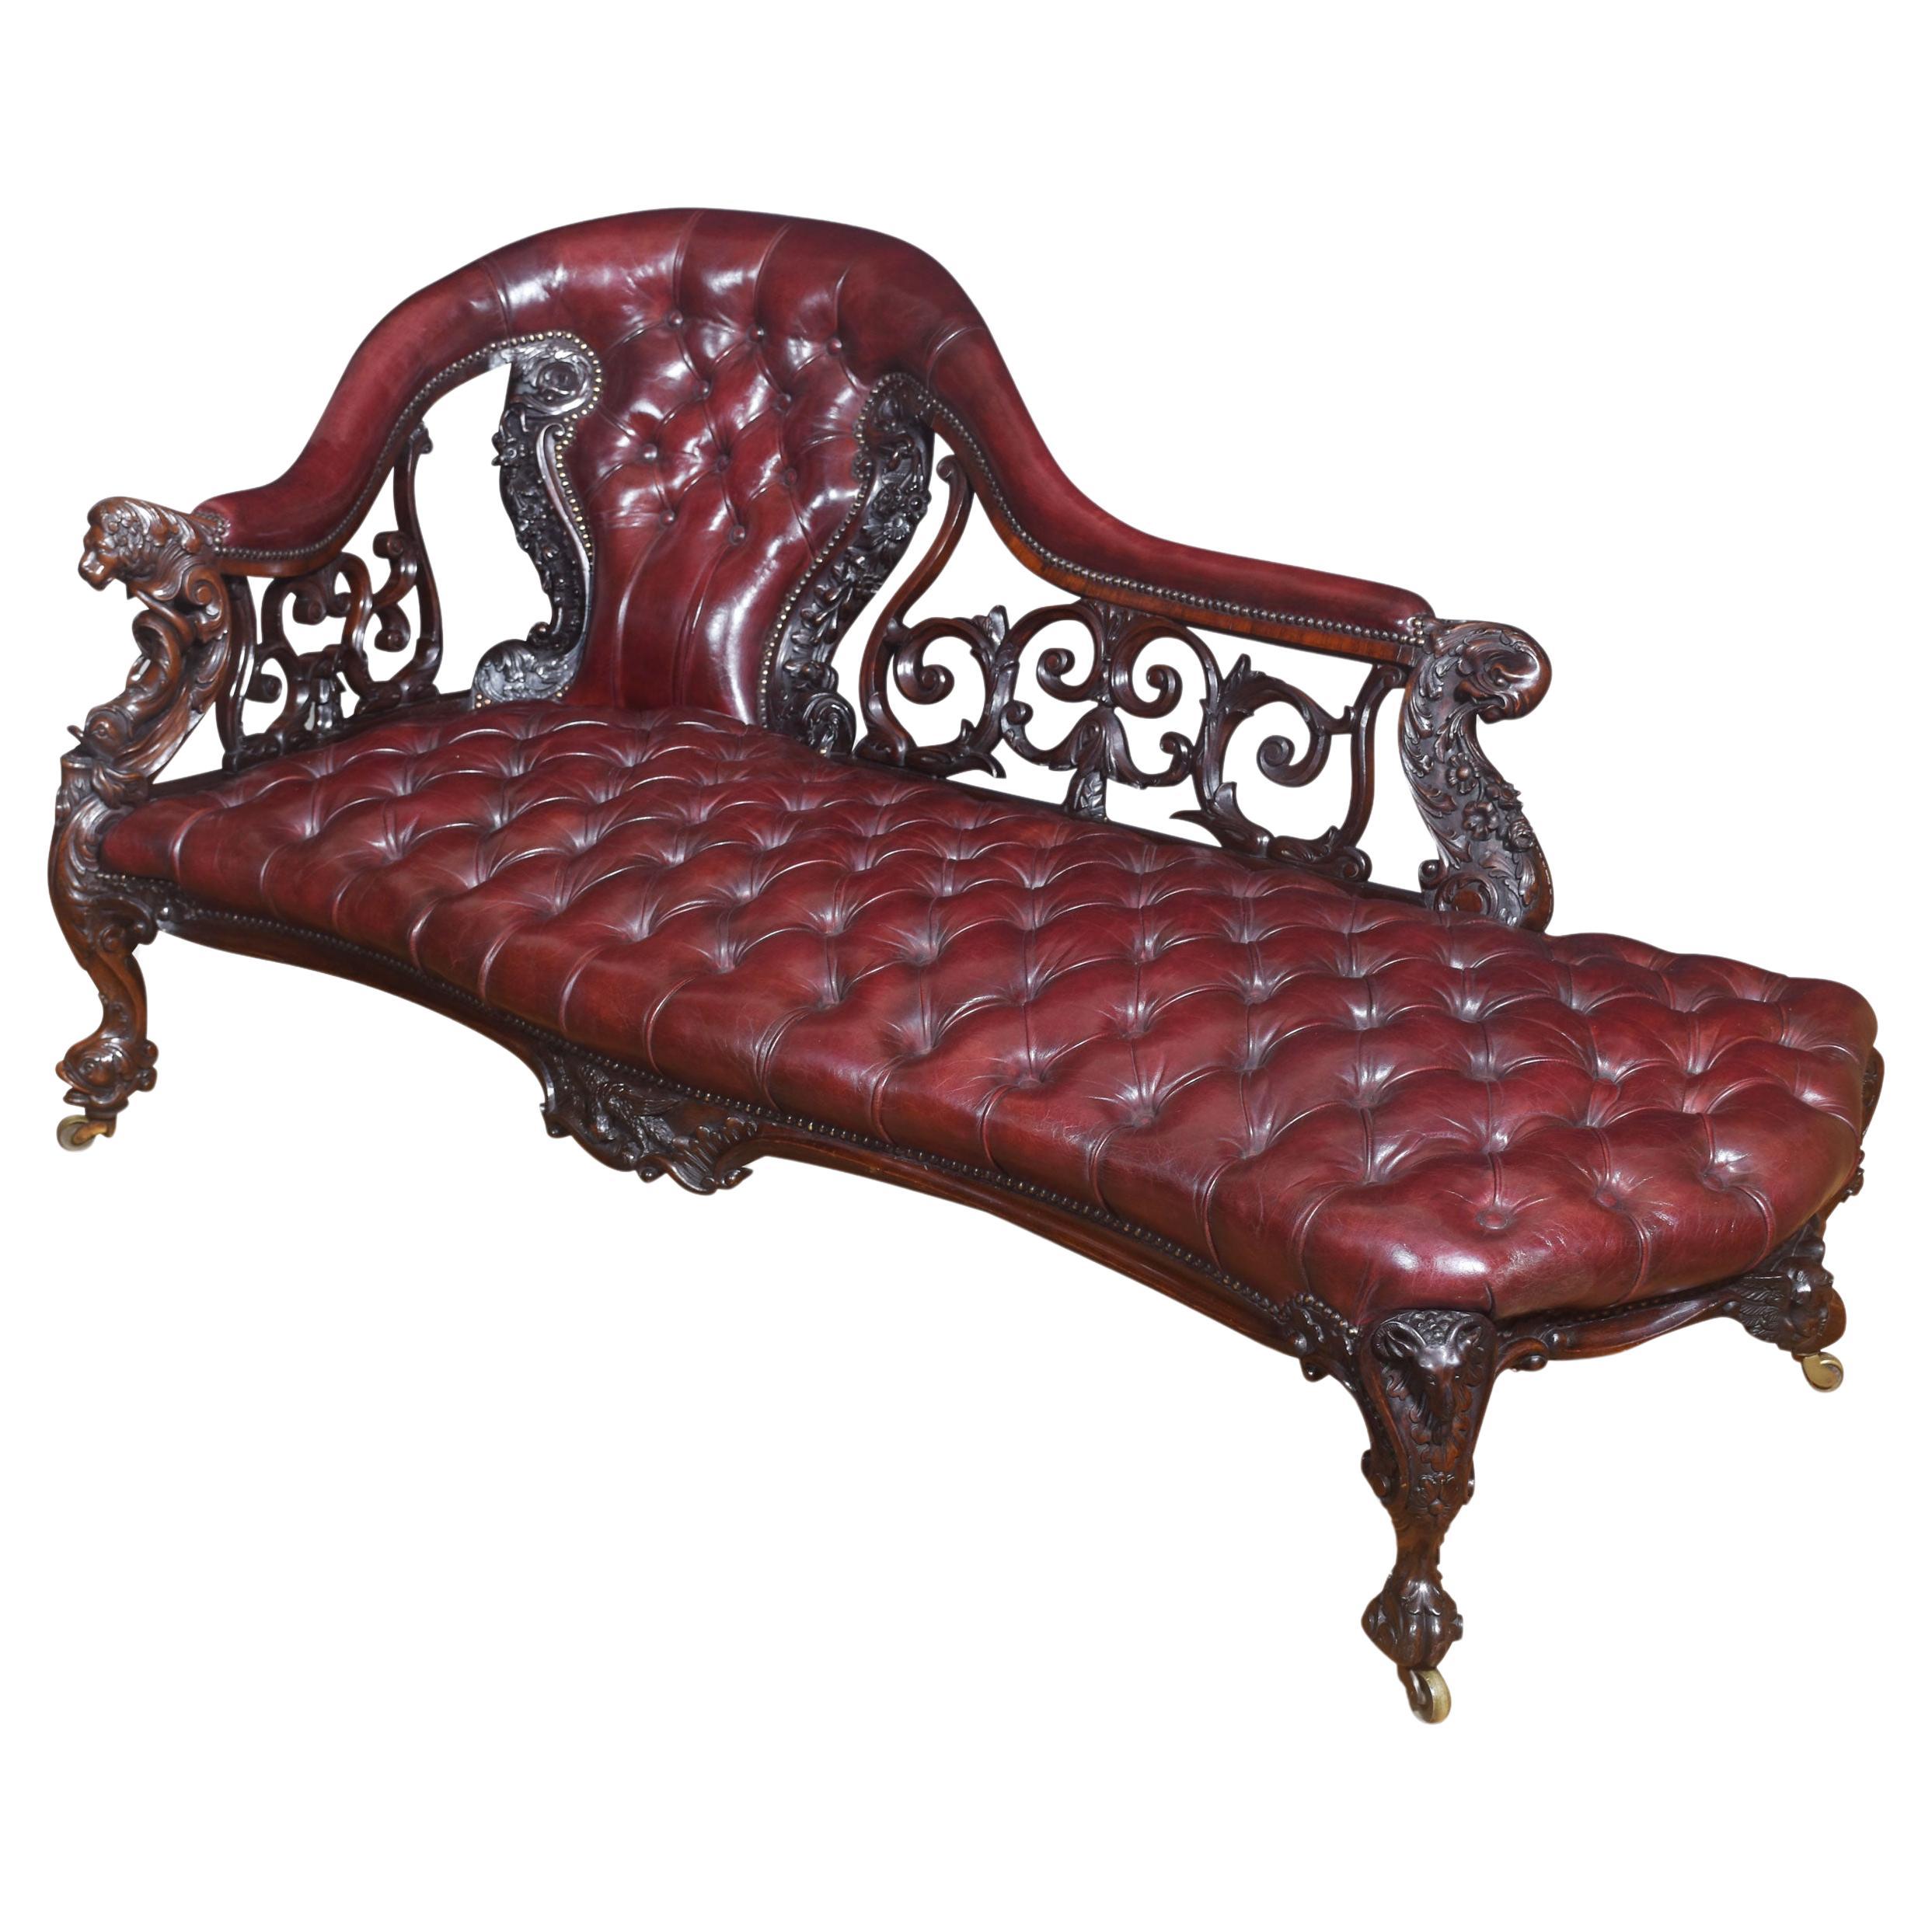 Rococo revival chaise longue